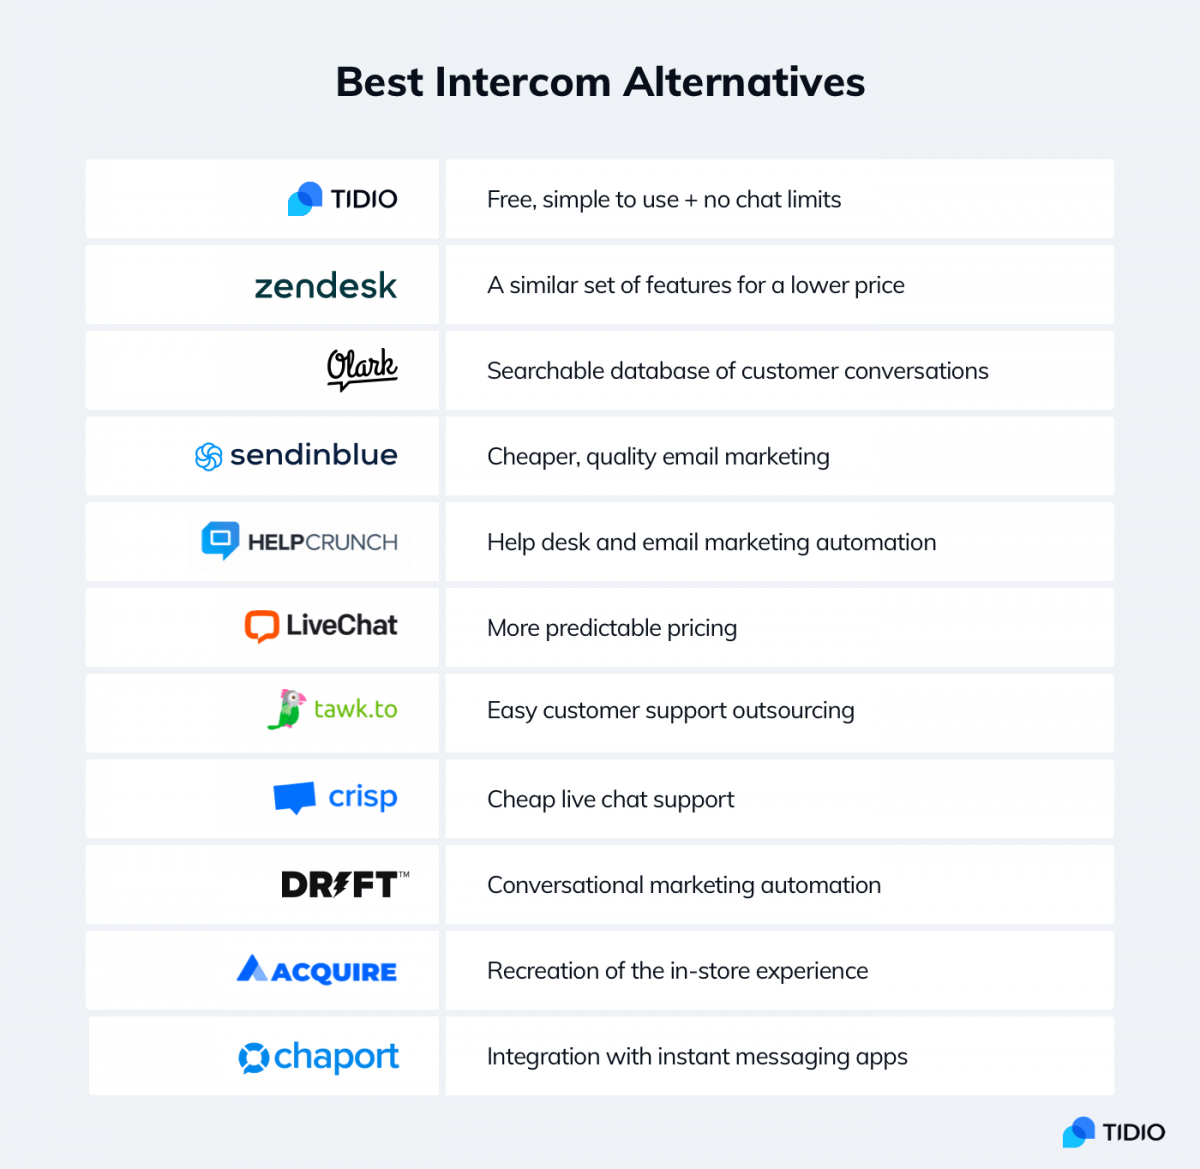 List of Intercom alternatives with logos and short descriptions